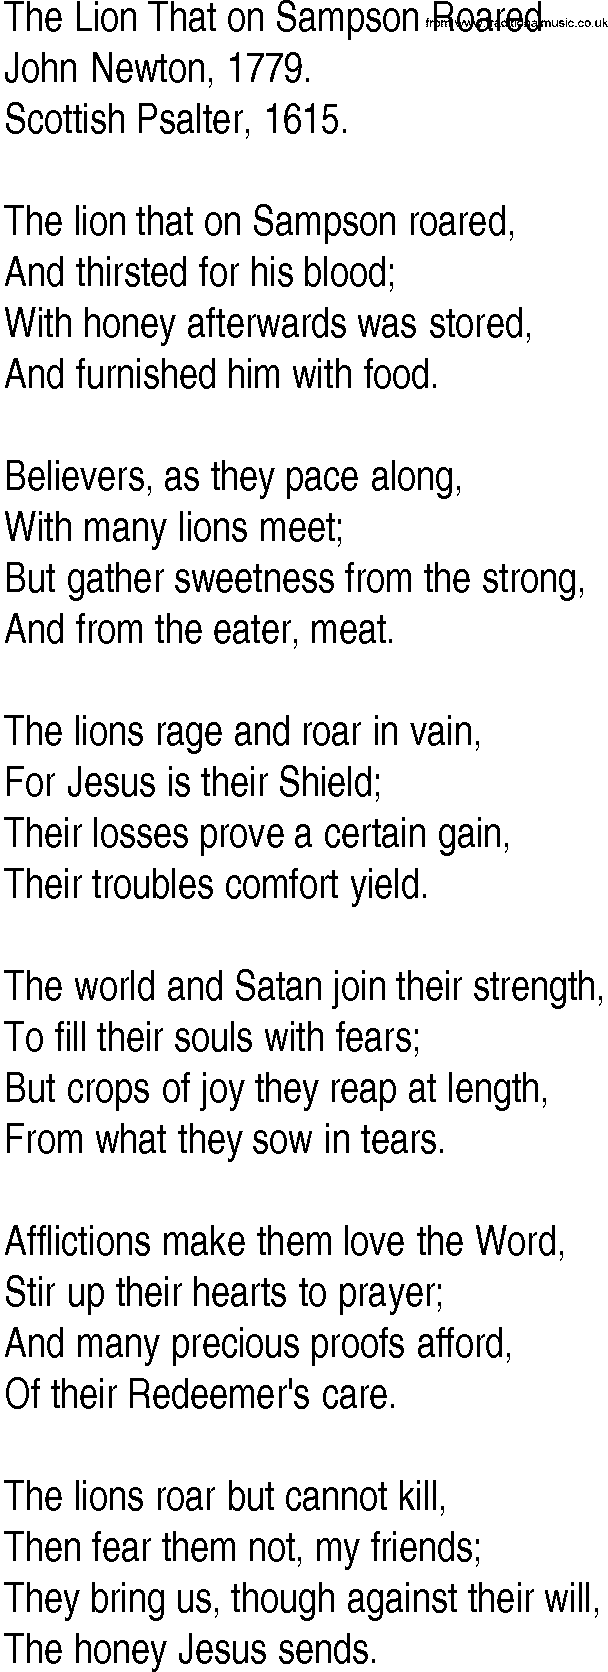 Hymn and Gospel Song: The Lion That on Sampson Roared by John Newton lyrics